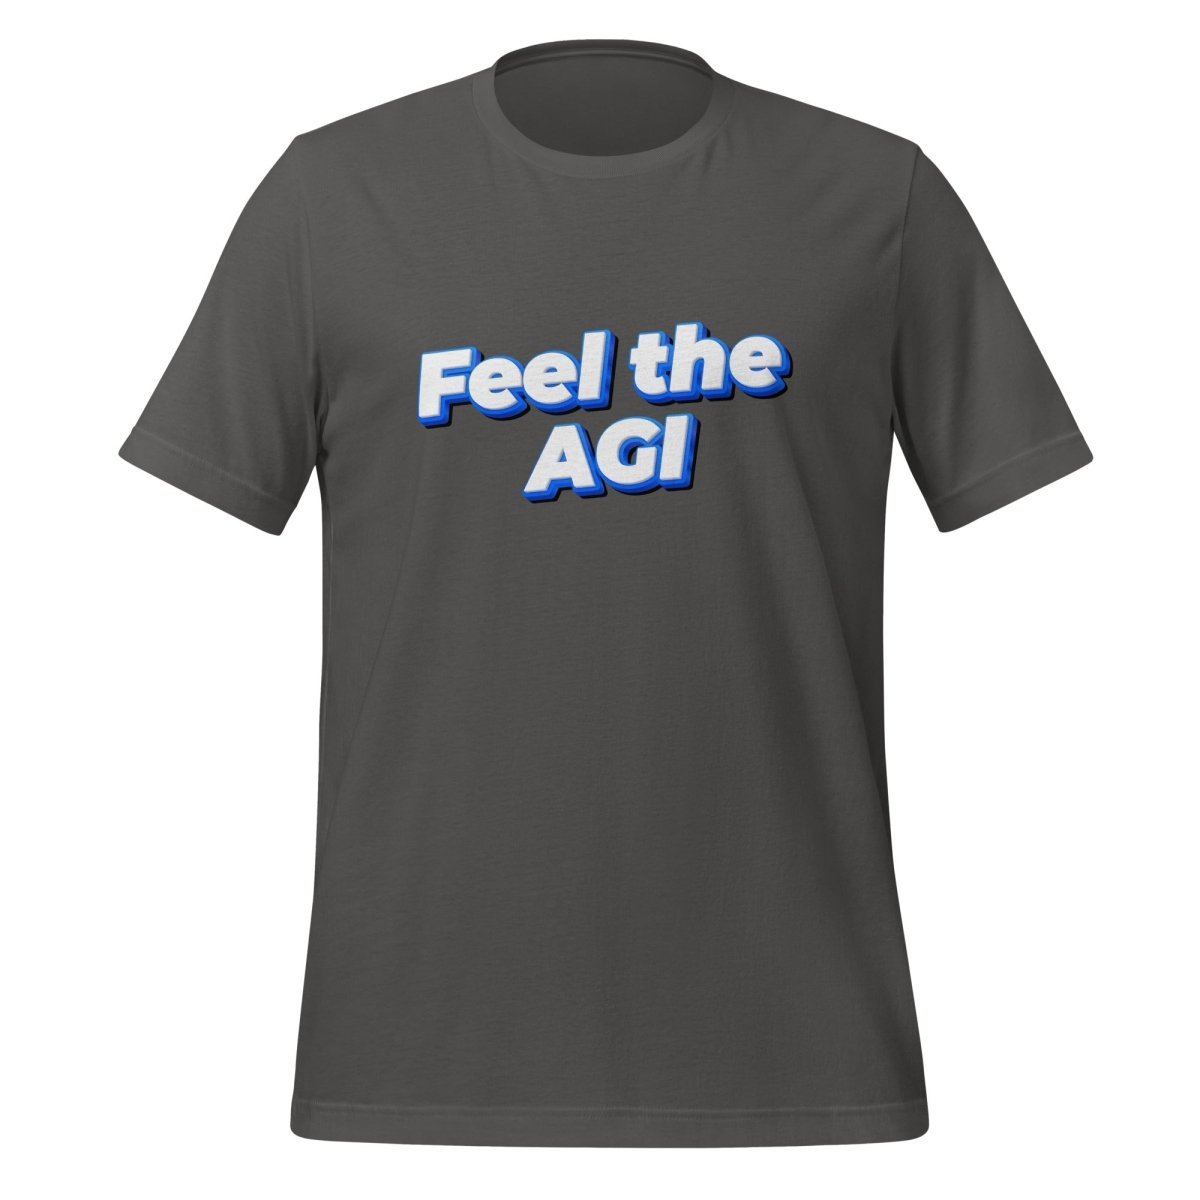 Feel the AGI T - Shirt 2 (unisex) - Asphalt - AI Store